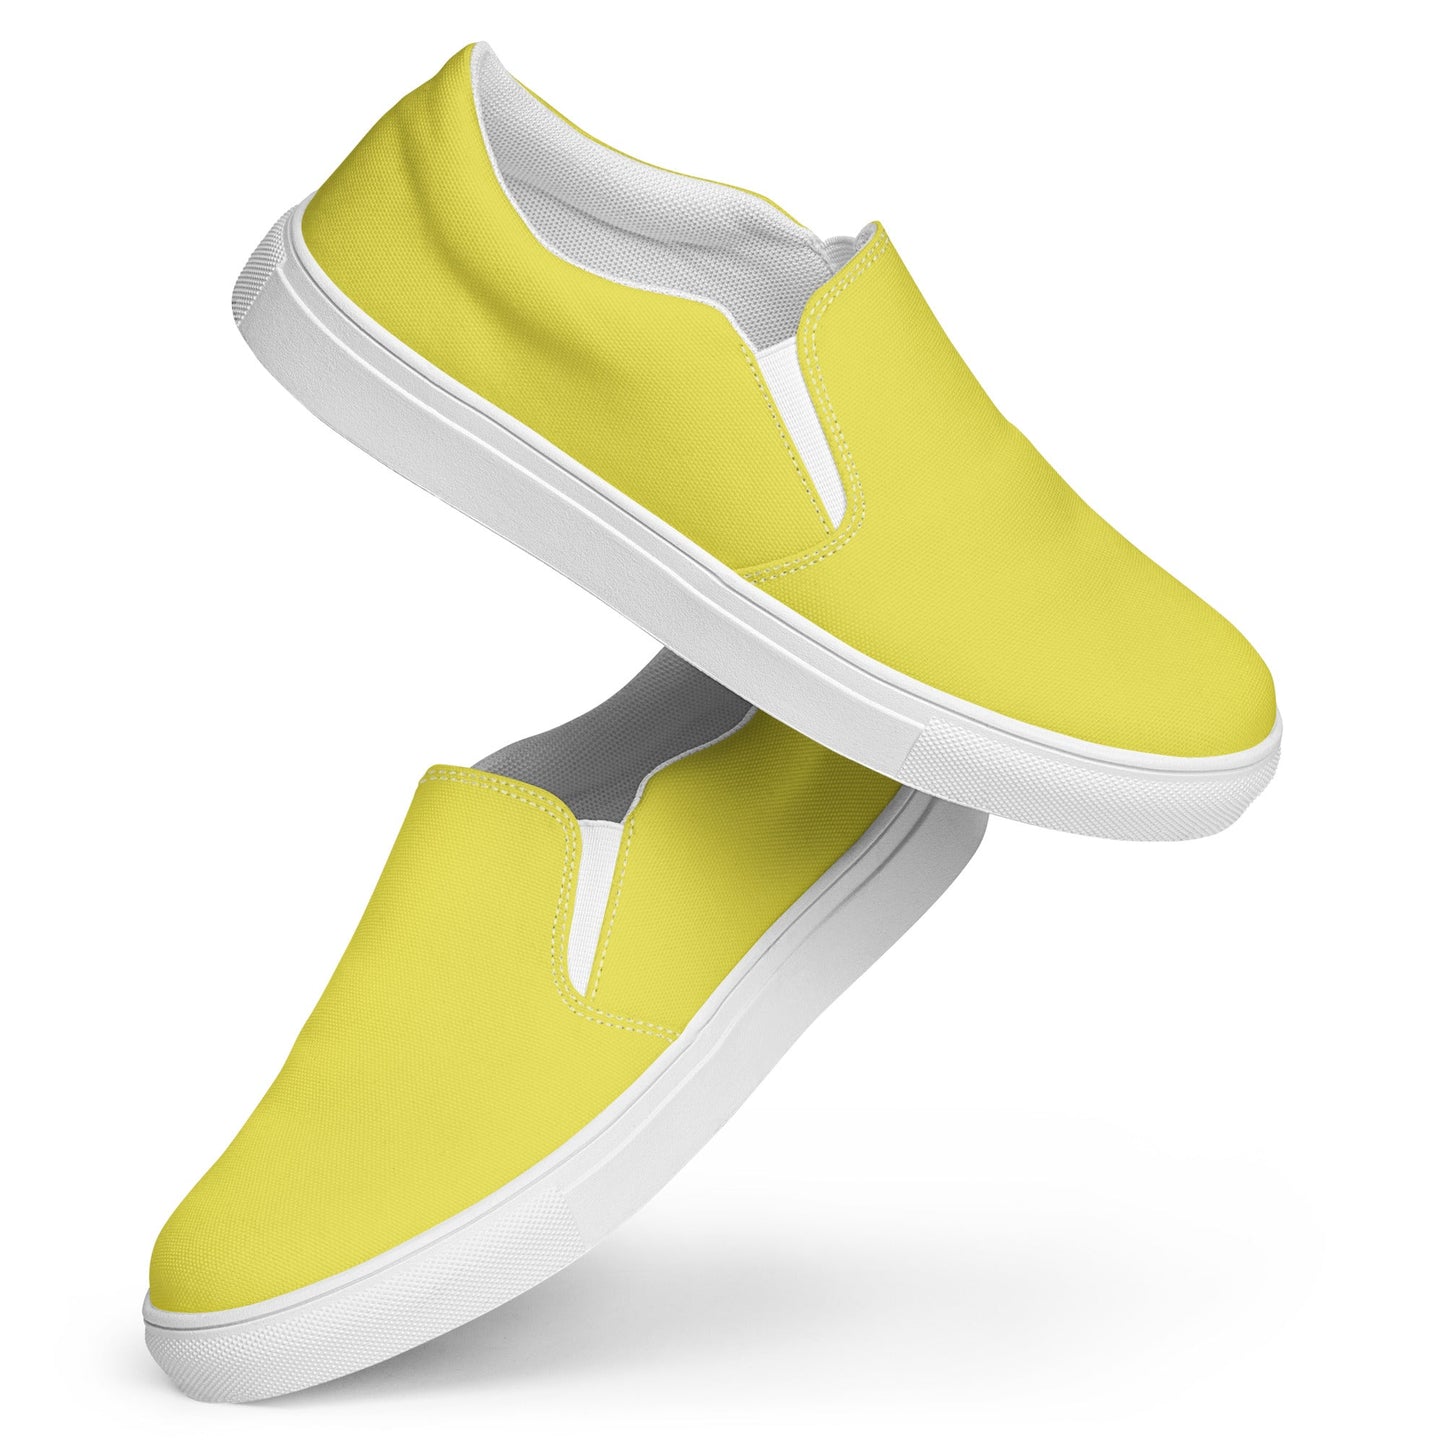 klasneakers Women’s slip-on canvas shoes - Yellow